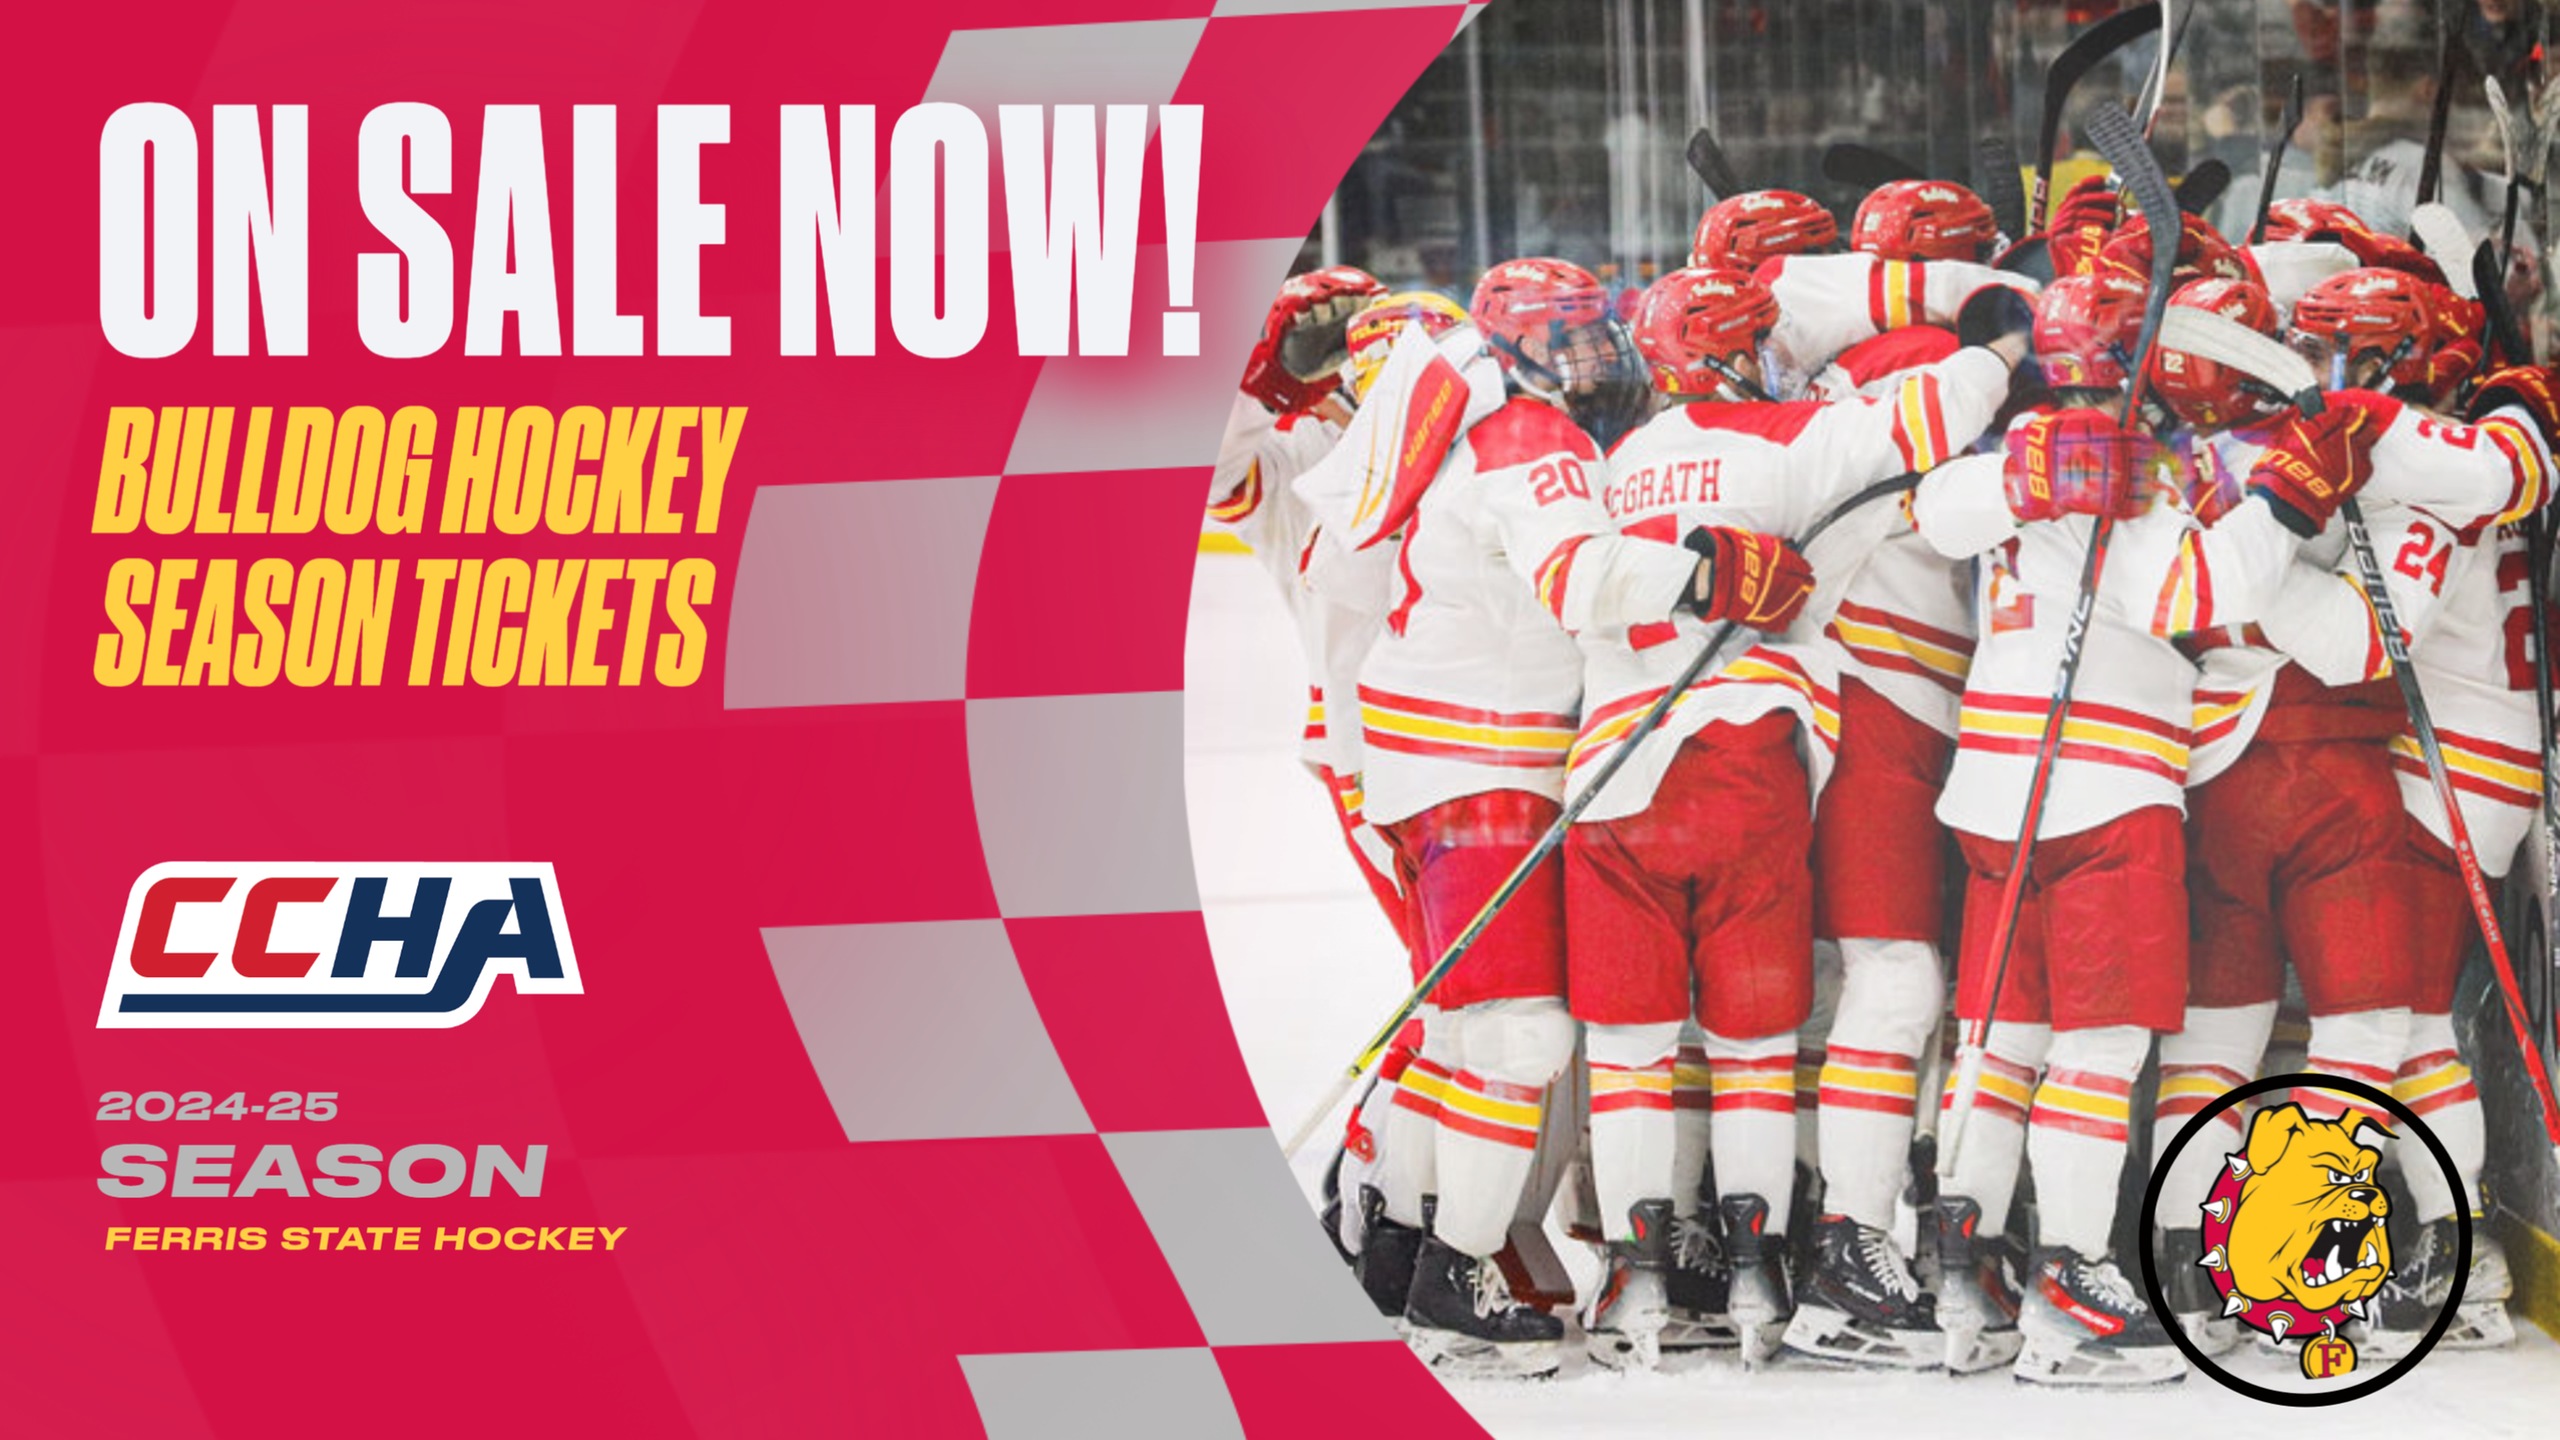 PURCHASE NOW! Bulldog Hockey Season Tickets For 2024-25 Season Now On Sale!